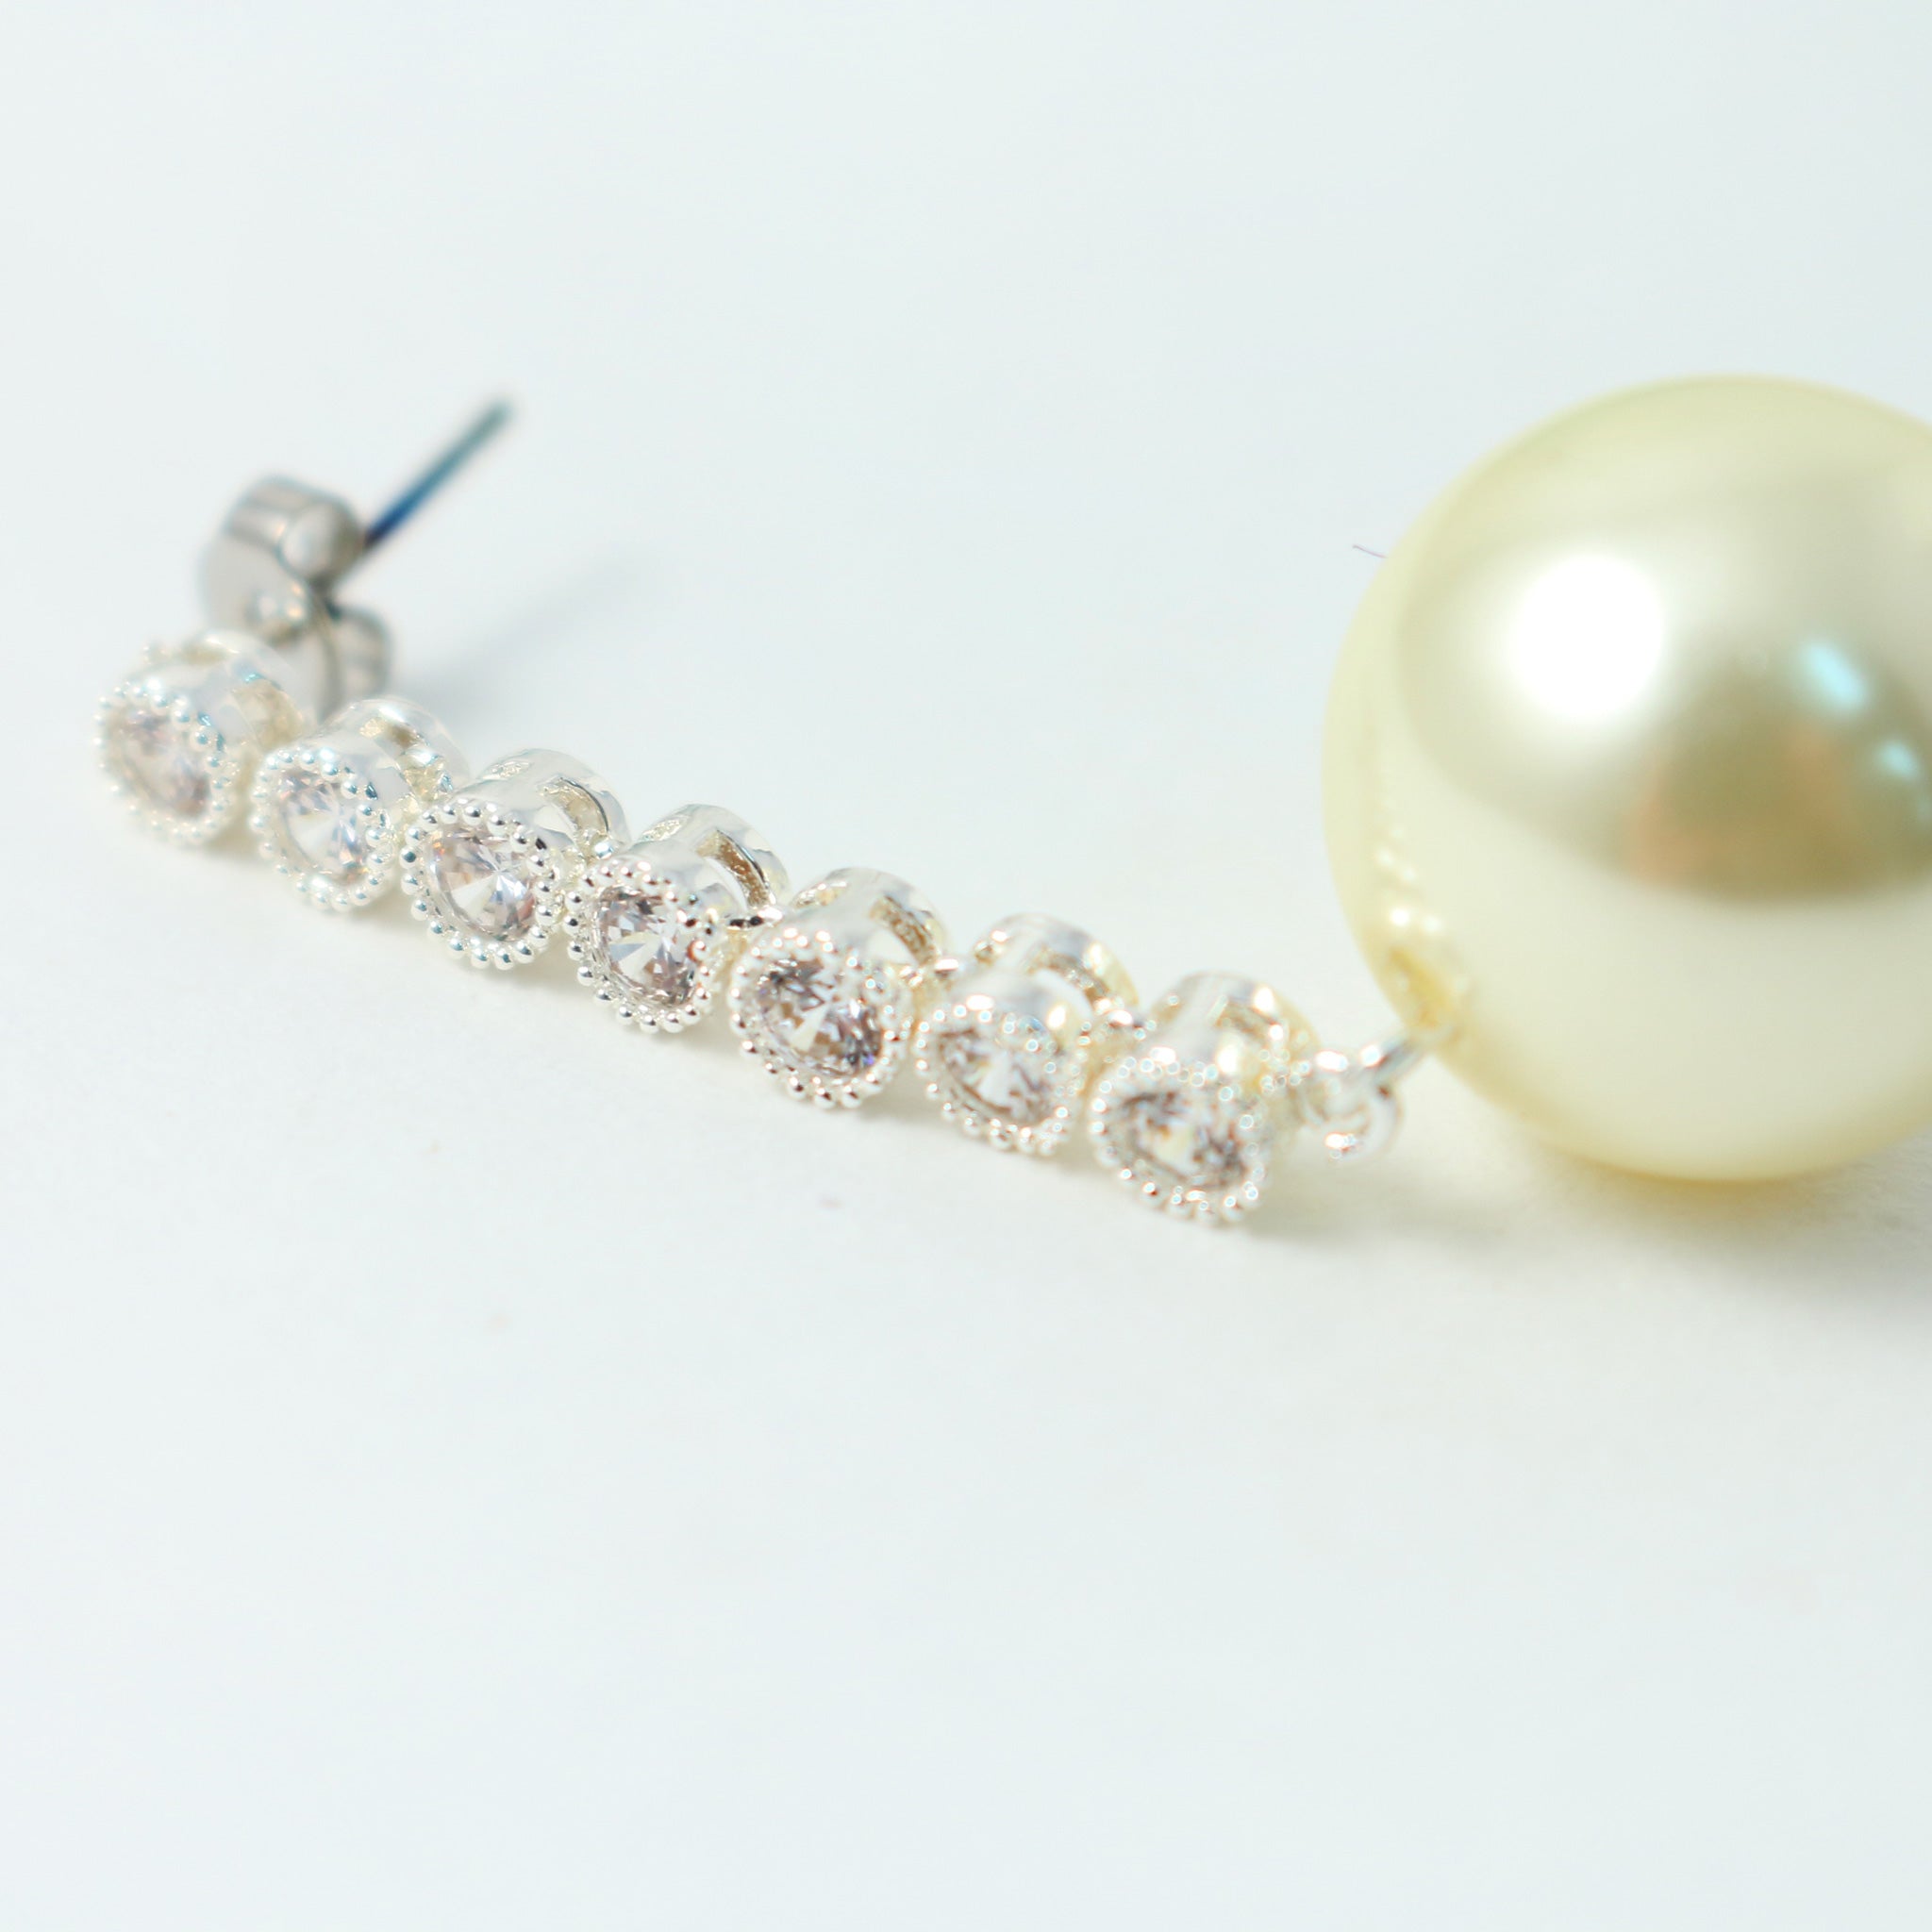 Cubic zirconia and pearl long earrings / earrings